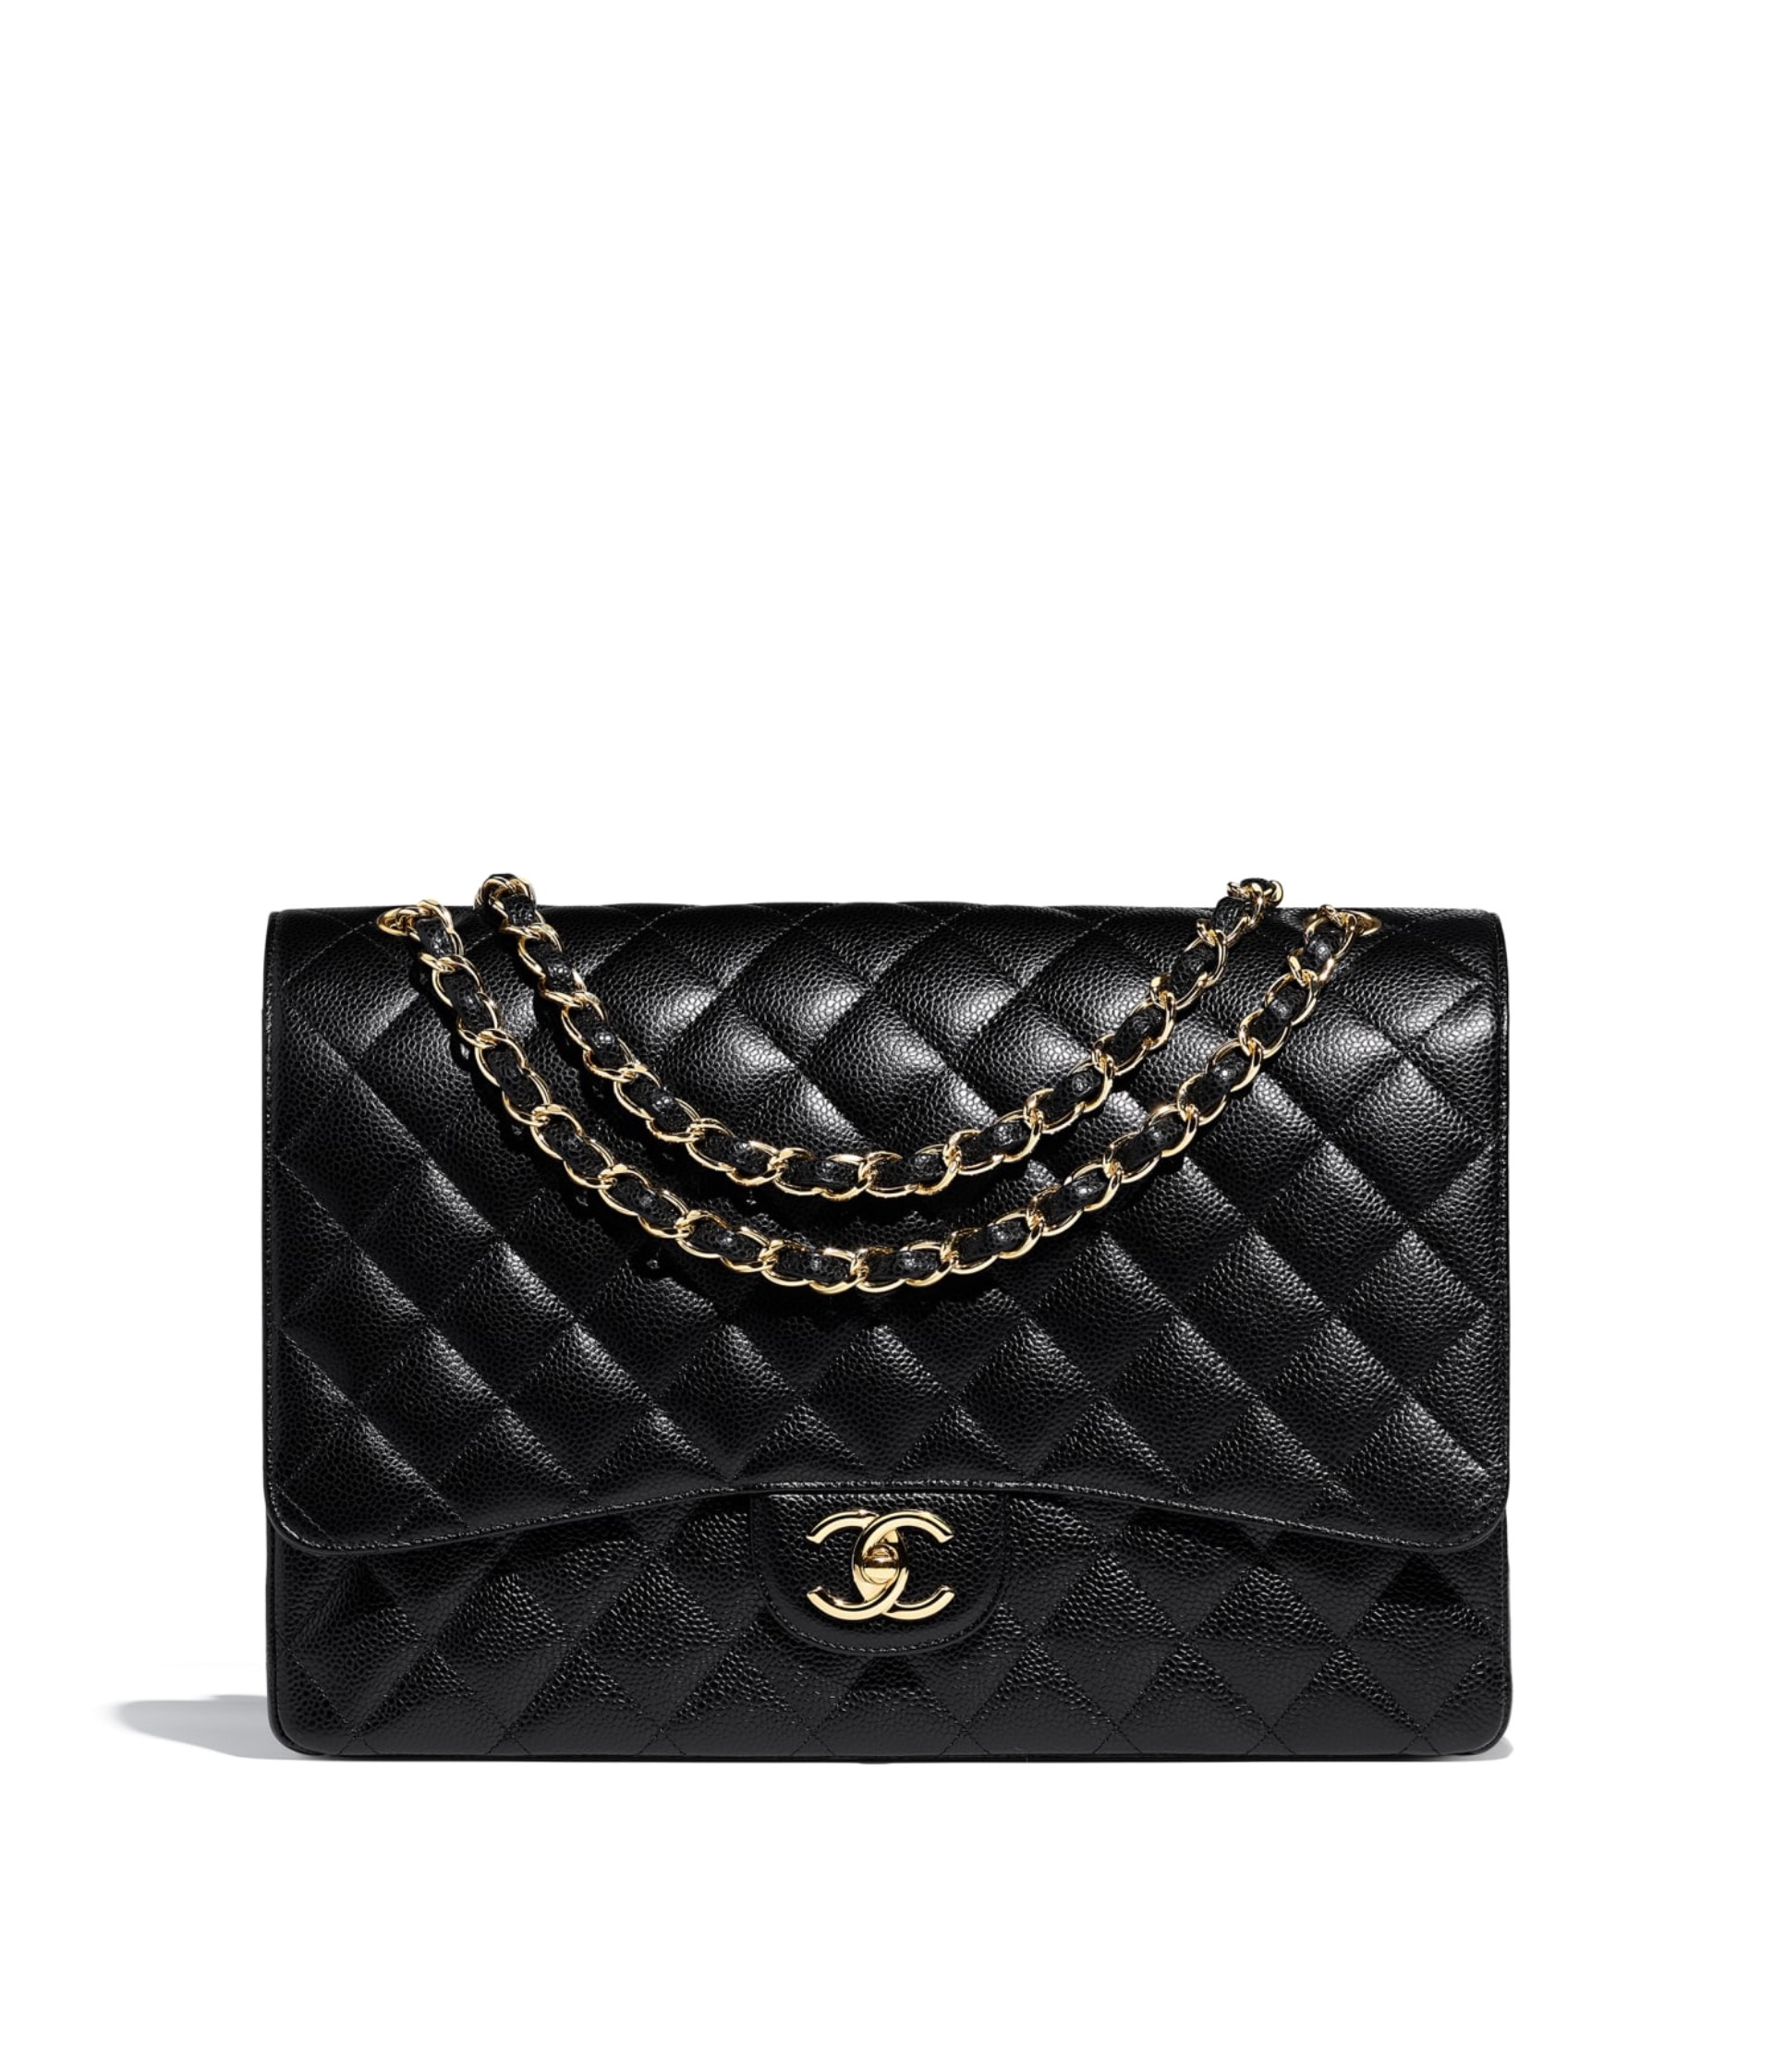 Chanel bolso clásico